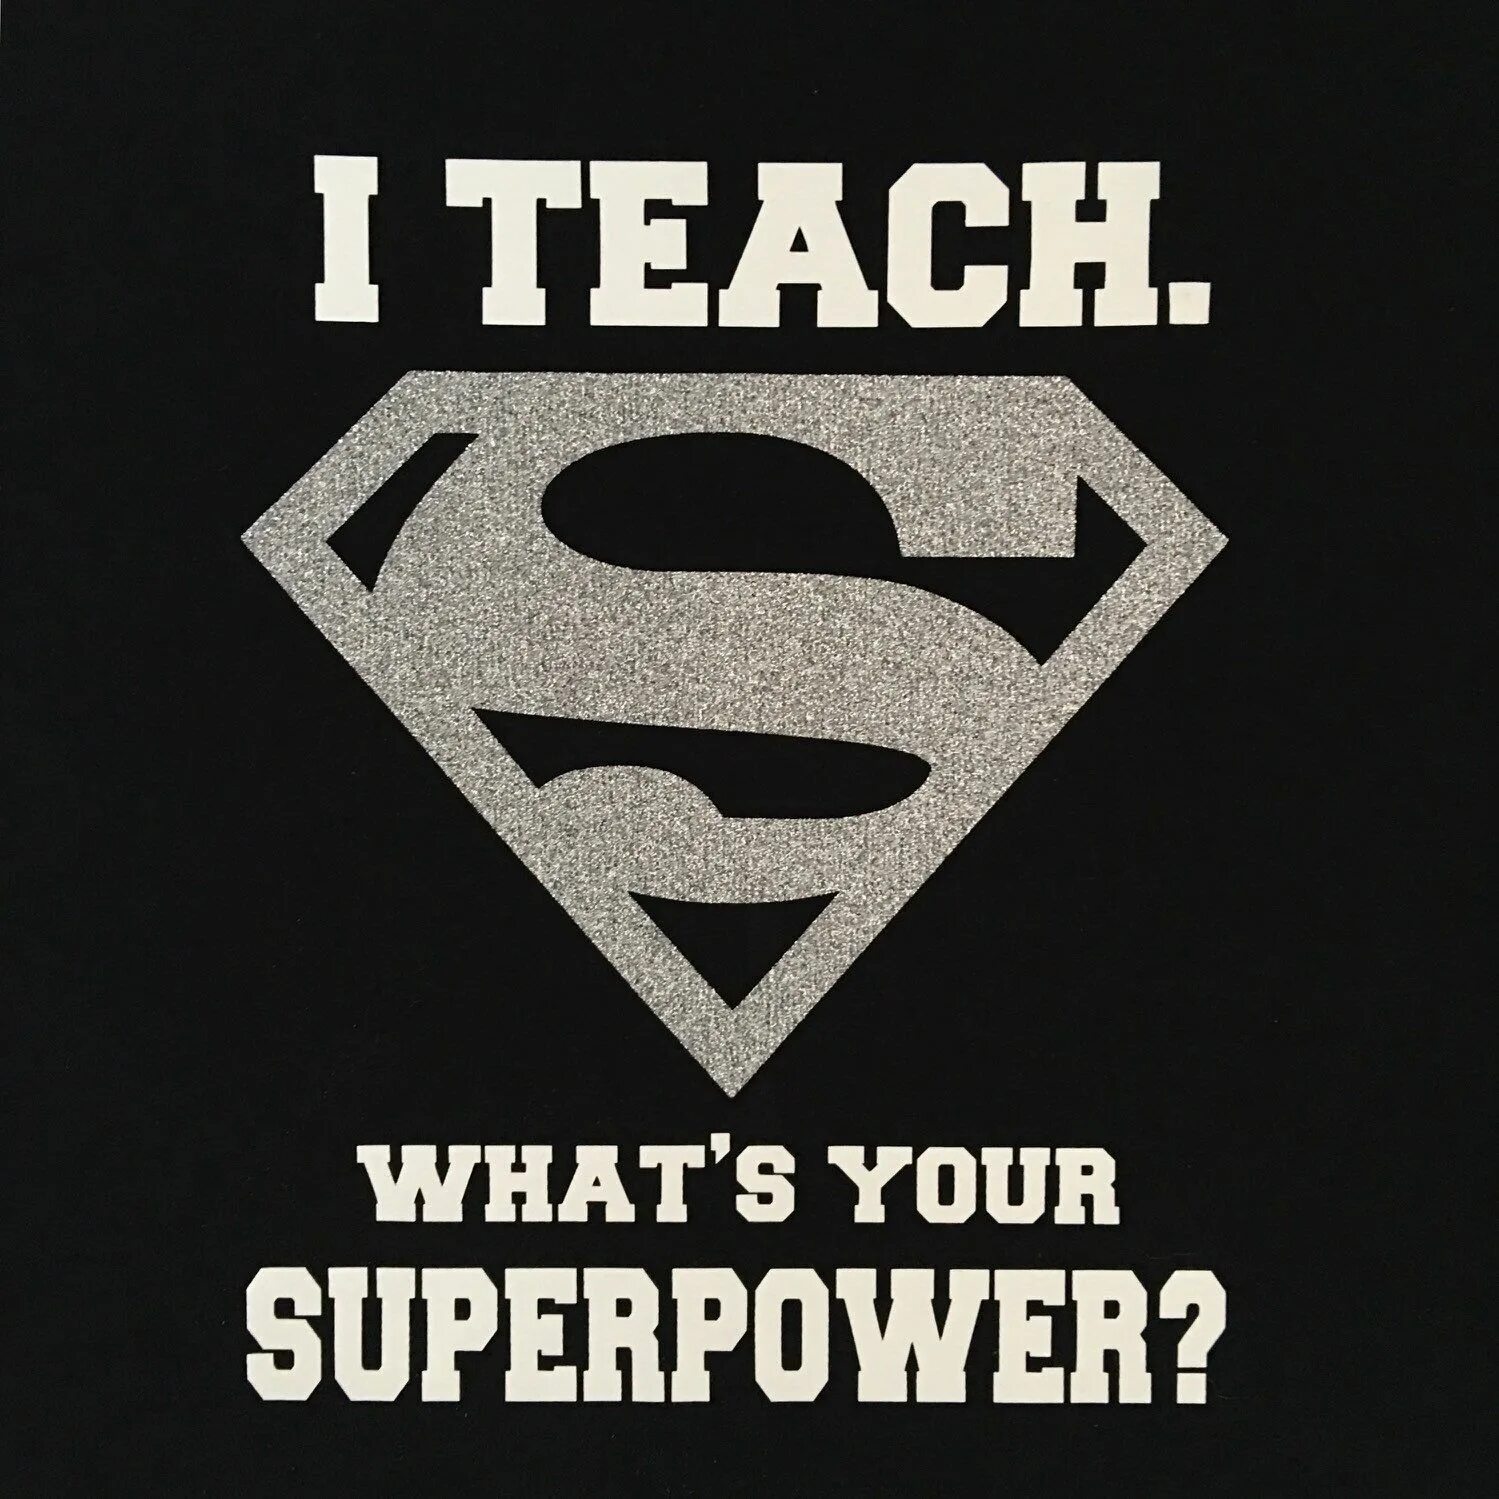 I am teacher what is your Superpower. I am a teacher what's your Superpower. Teacher Superpower. Татуировка i teach what's your Superpower. Teachers powers